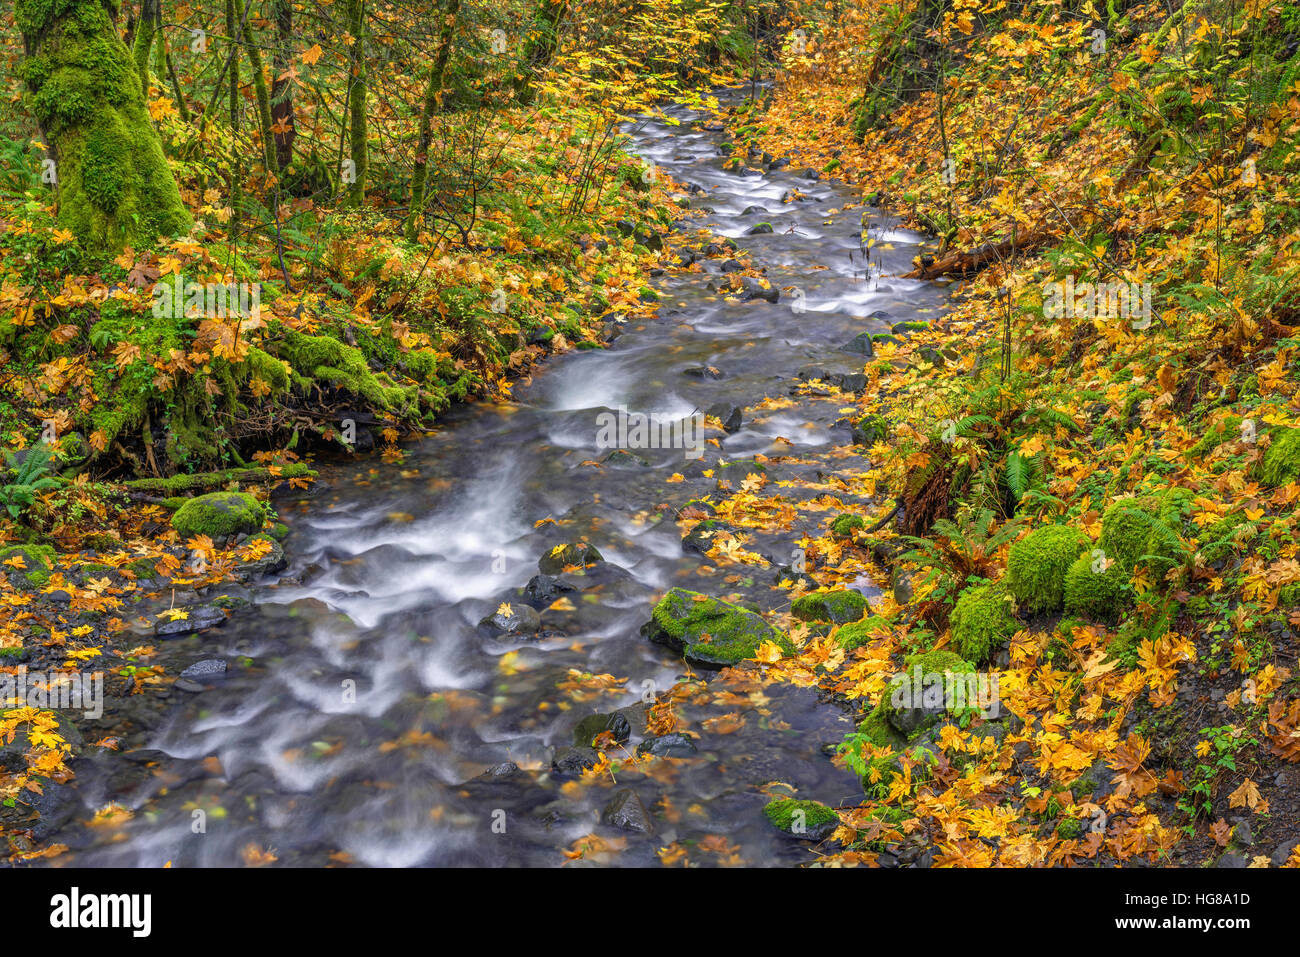 USA, Oregon, Columbia River Gorge National Scenic Area, Fallen leaves of bigleaf maple and forest border Gorton Creek in autumn. Stock Photo